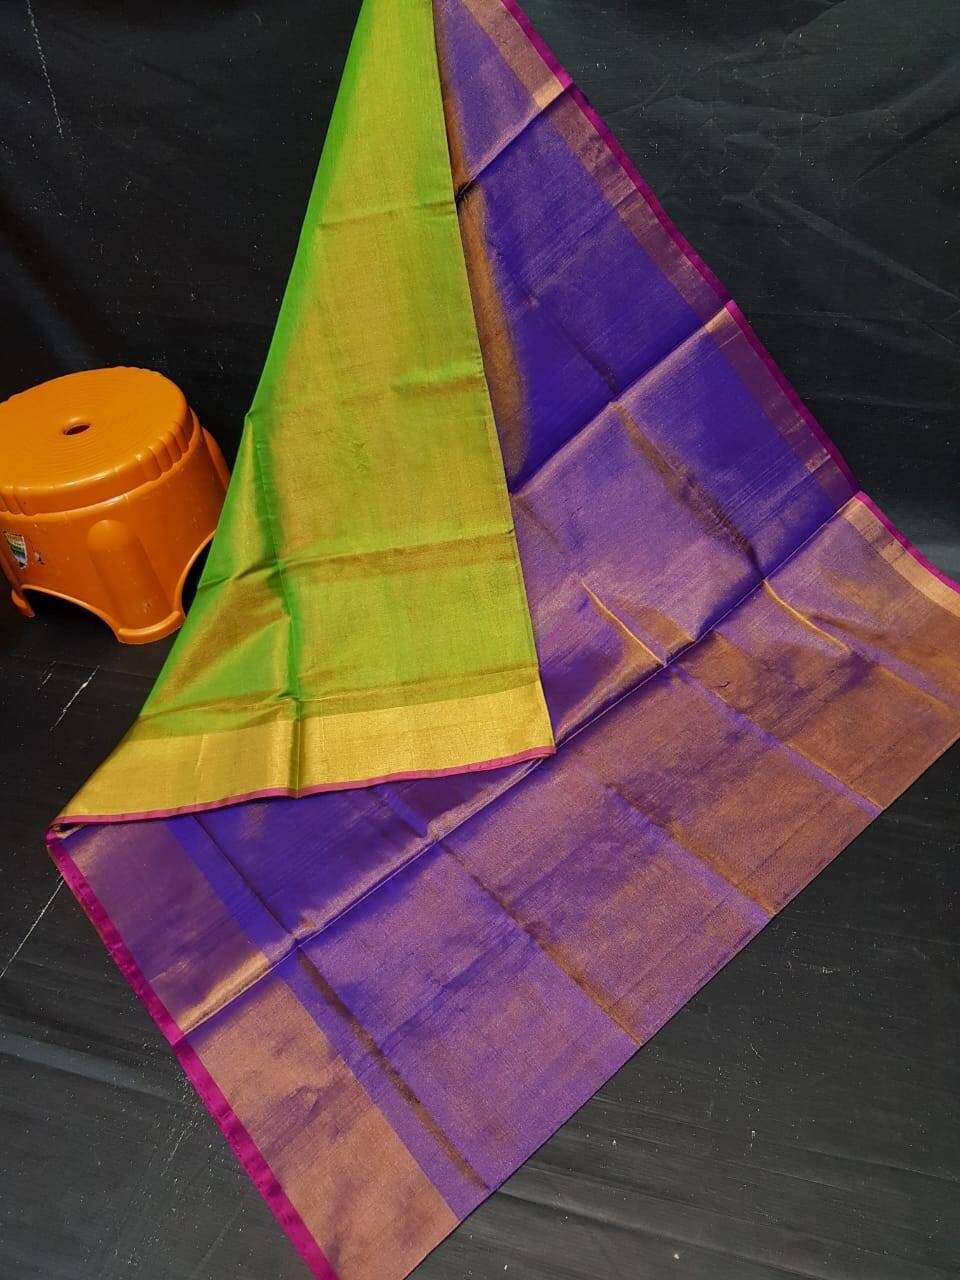 Uppada saree Tissue silk uppada saree - Purple / Indigo with apple green